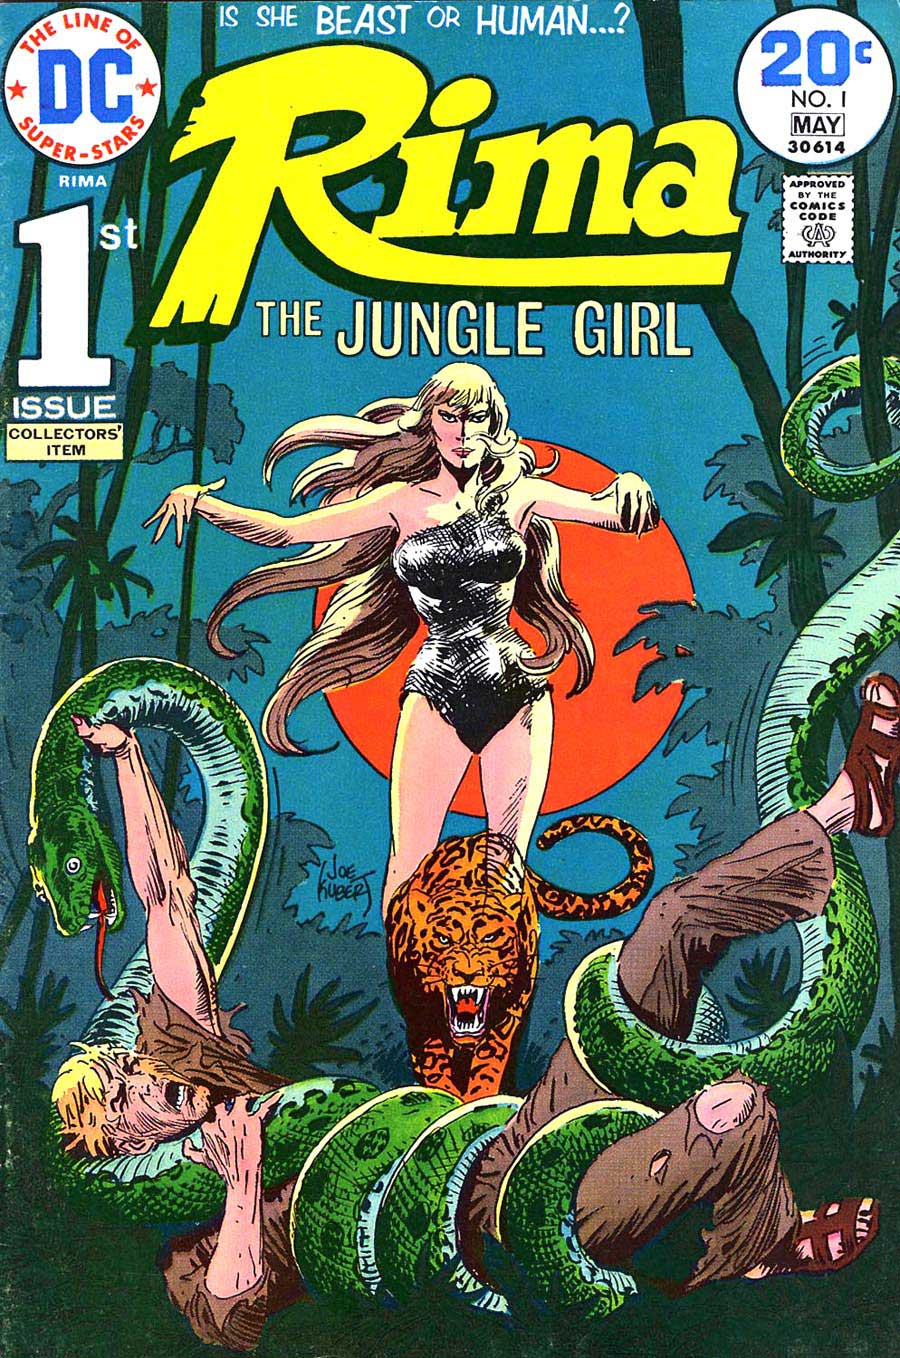 Rima the Jungle Girl v1 #1 dc bronze age comic book cover art by Joe Kubert